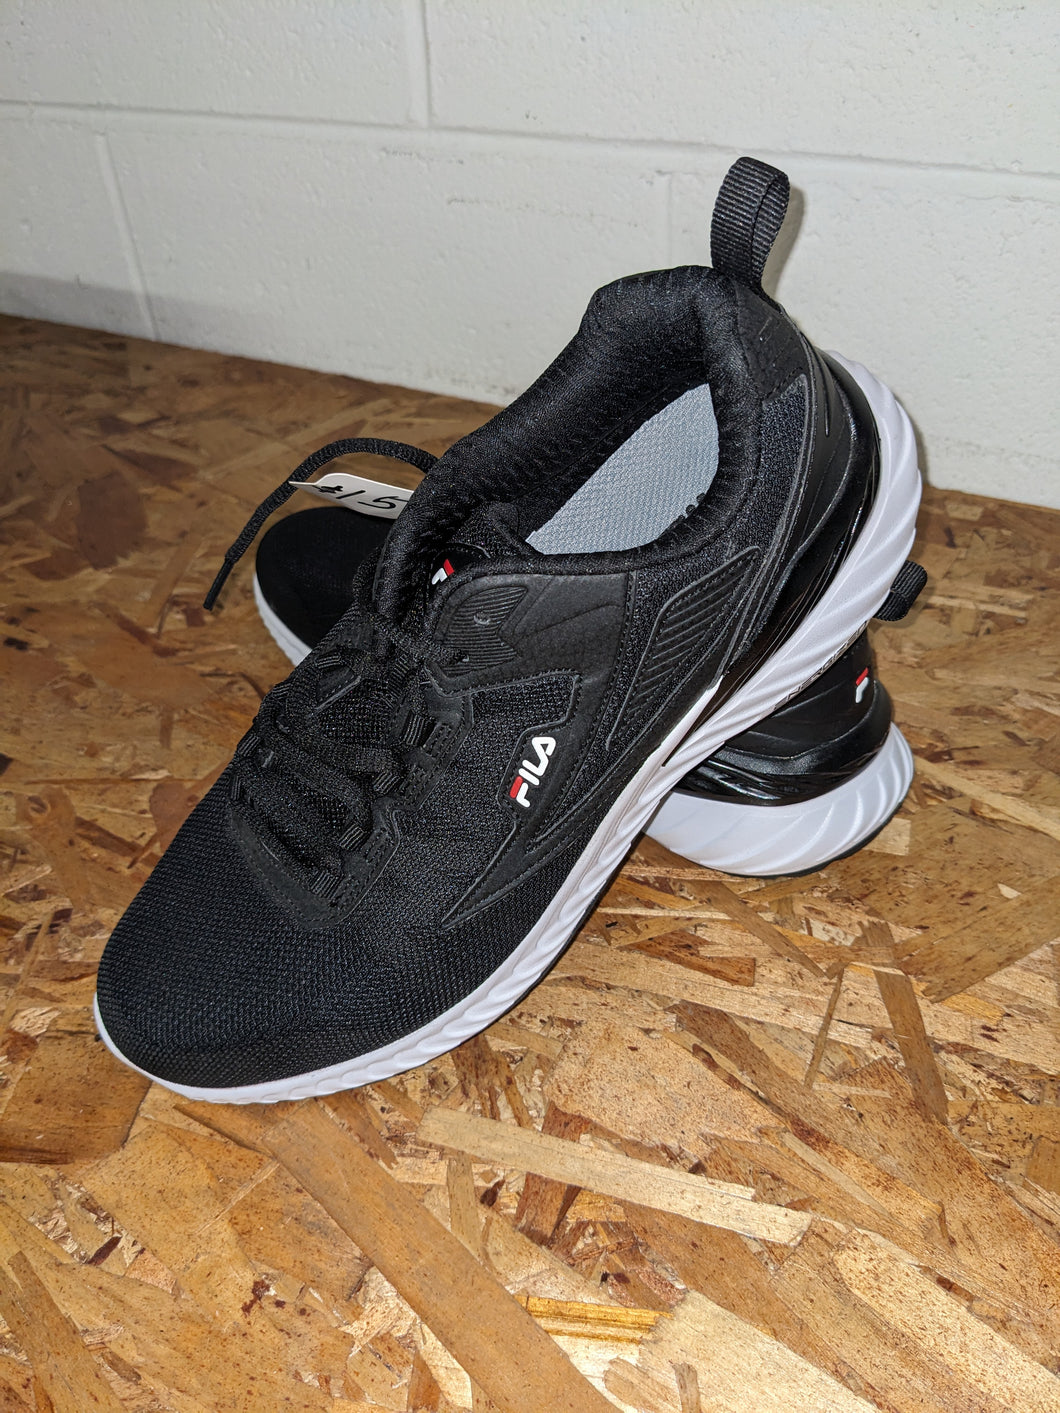 Men's Fila Windespeed Sneakers, black, size 8